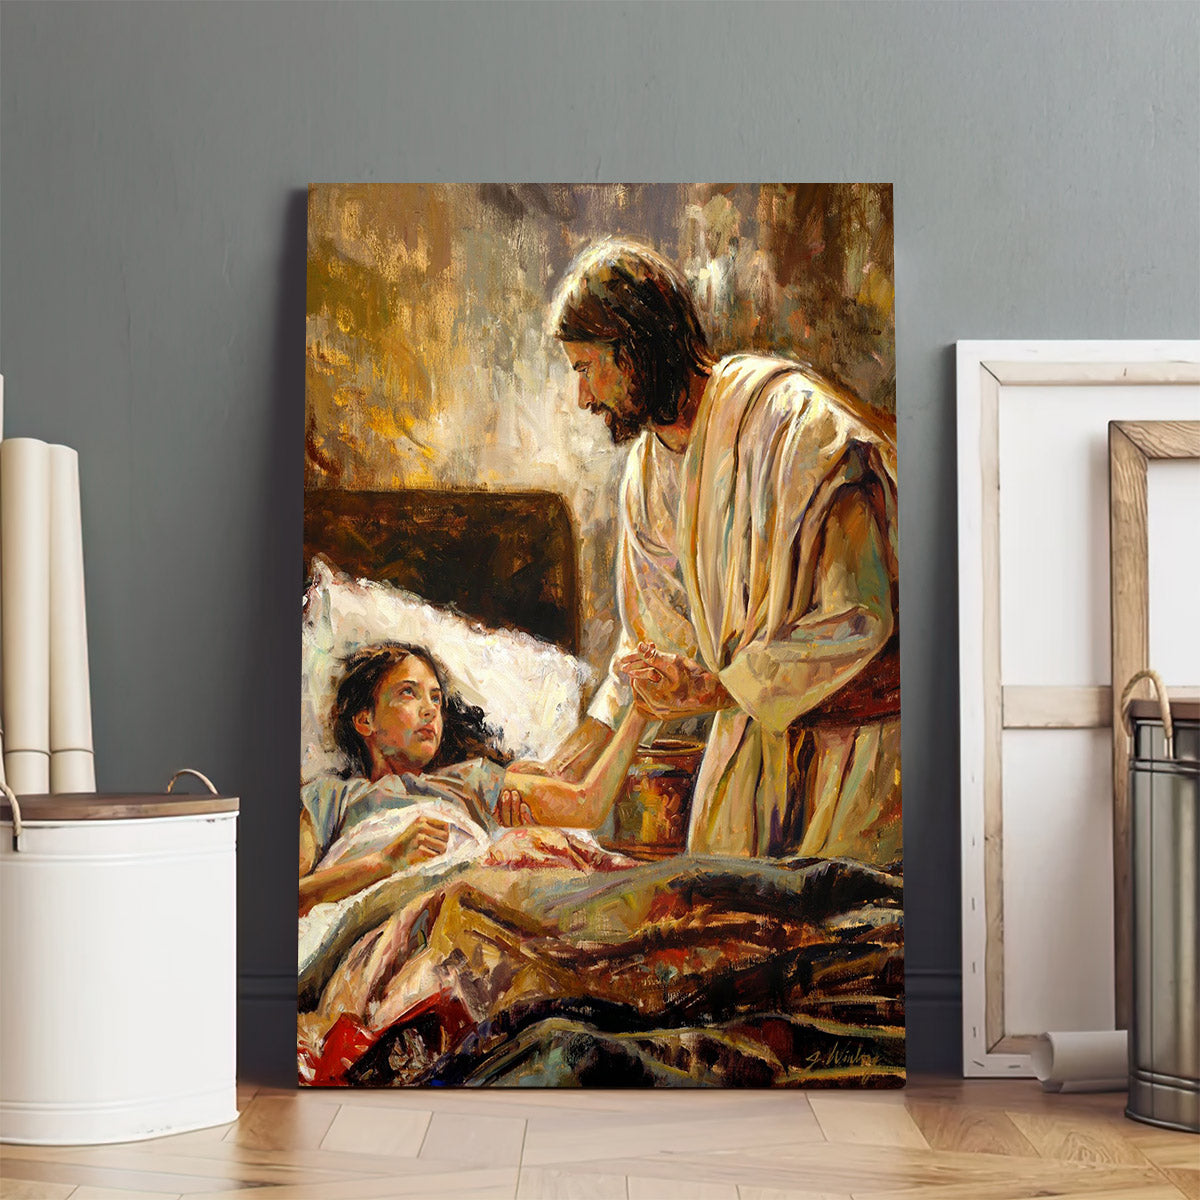 Jesus Christ Healing Canvas Picture - Jesus Christ Canvas Art - Christian Wall Canvas